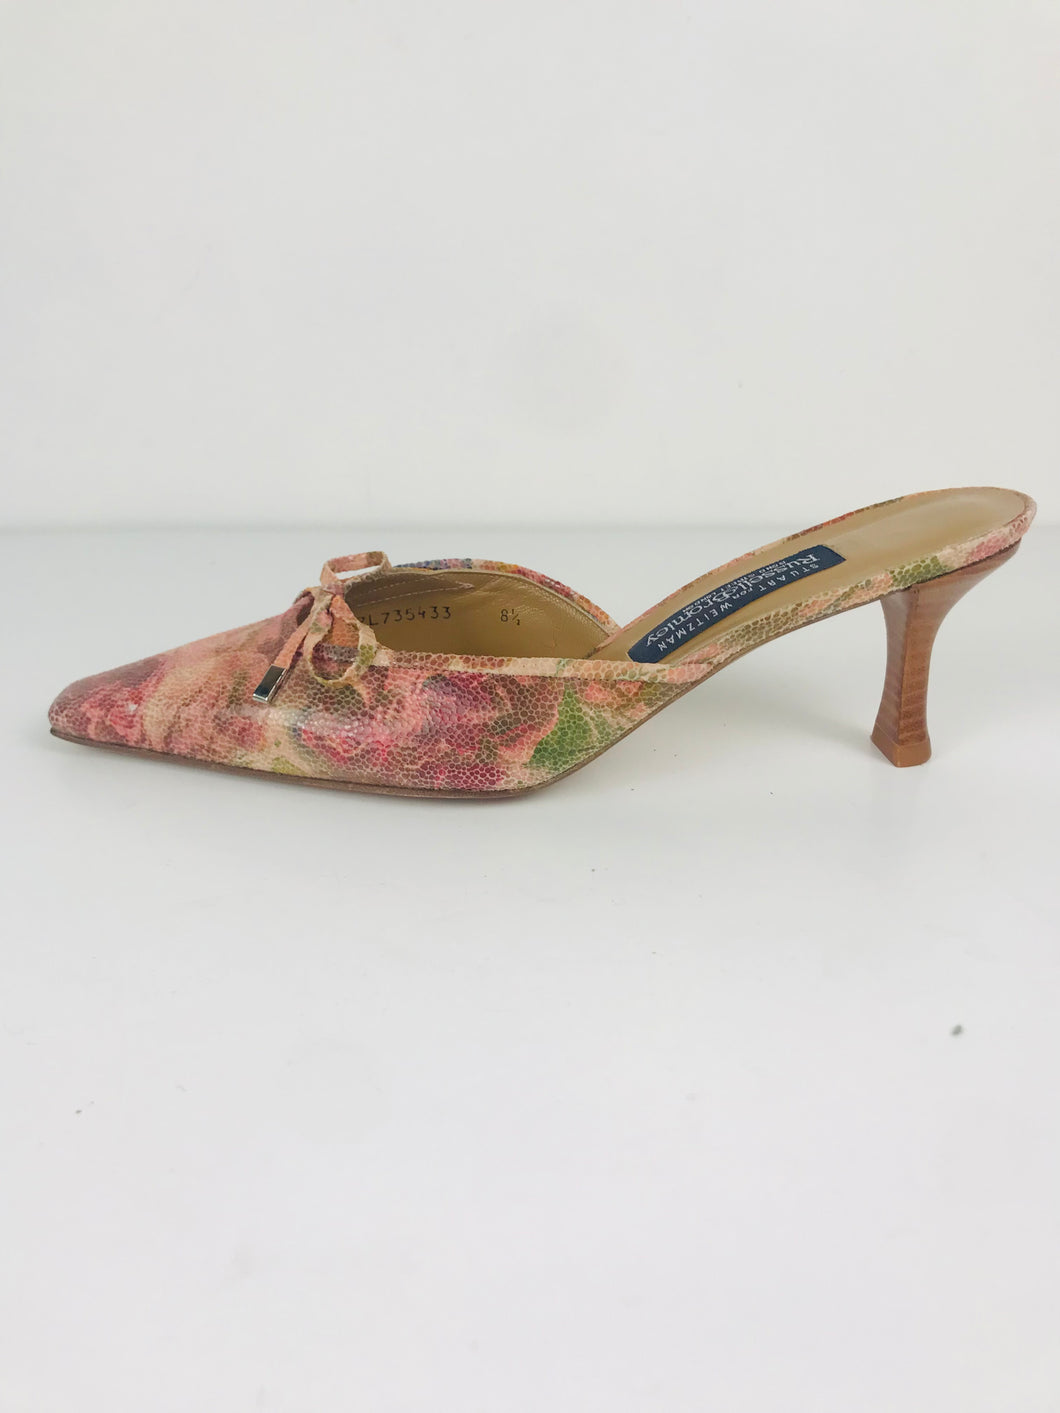 Russell & Bromley Women's Floral Stewart Weitzman Heels | US8.5 UK6.5 | Pink